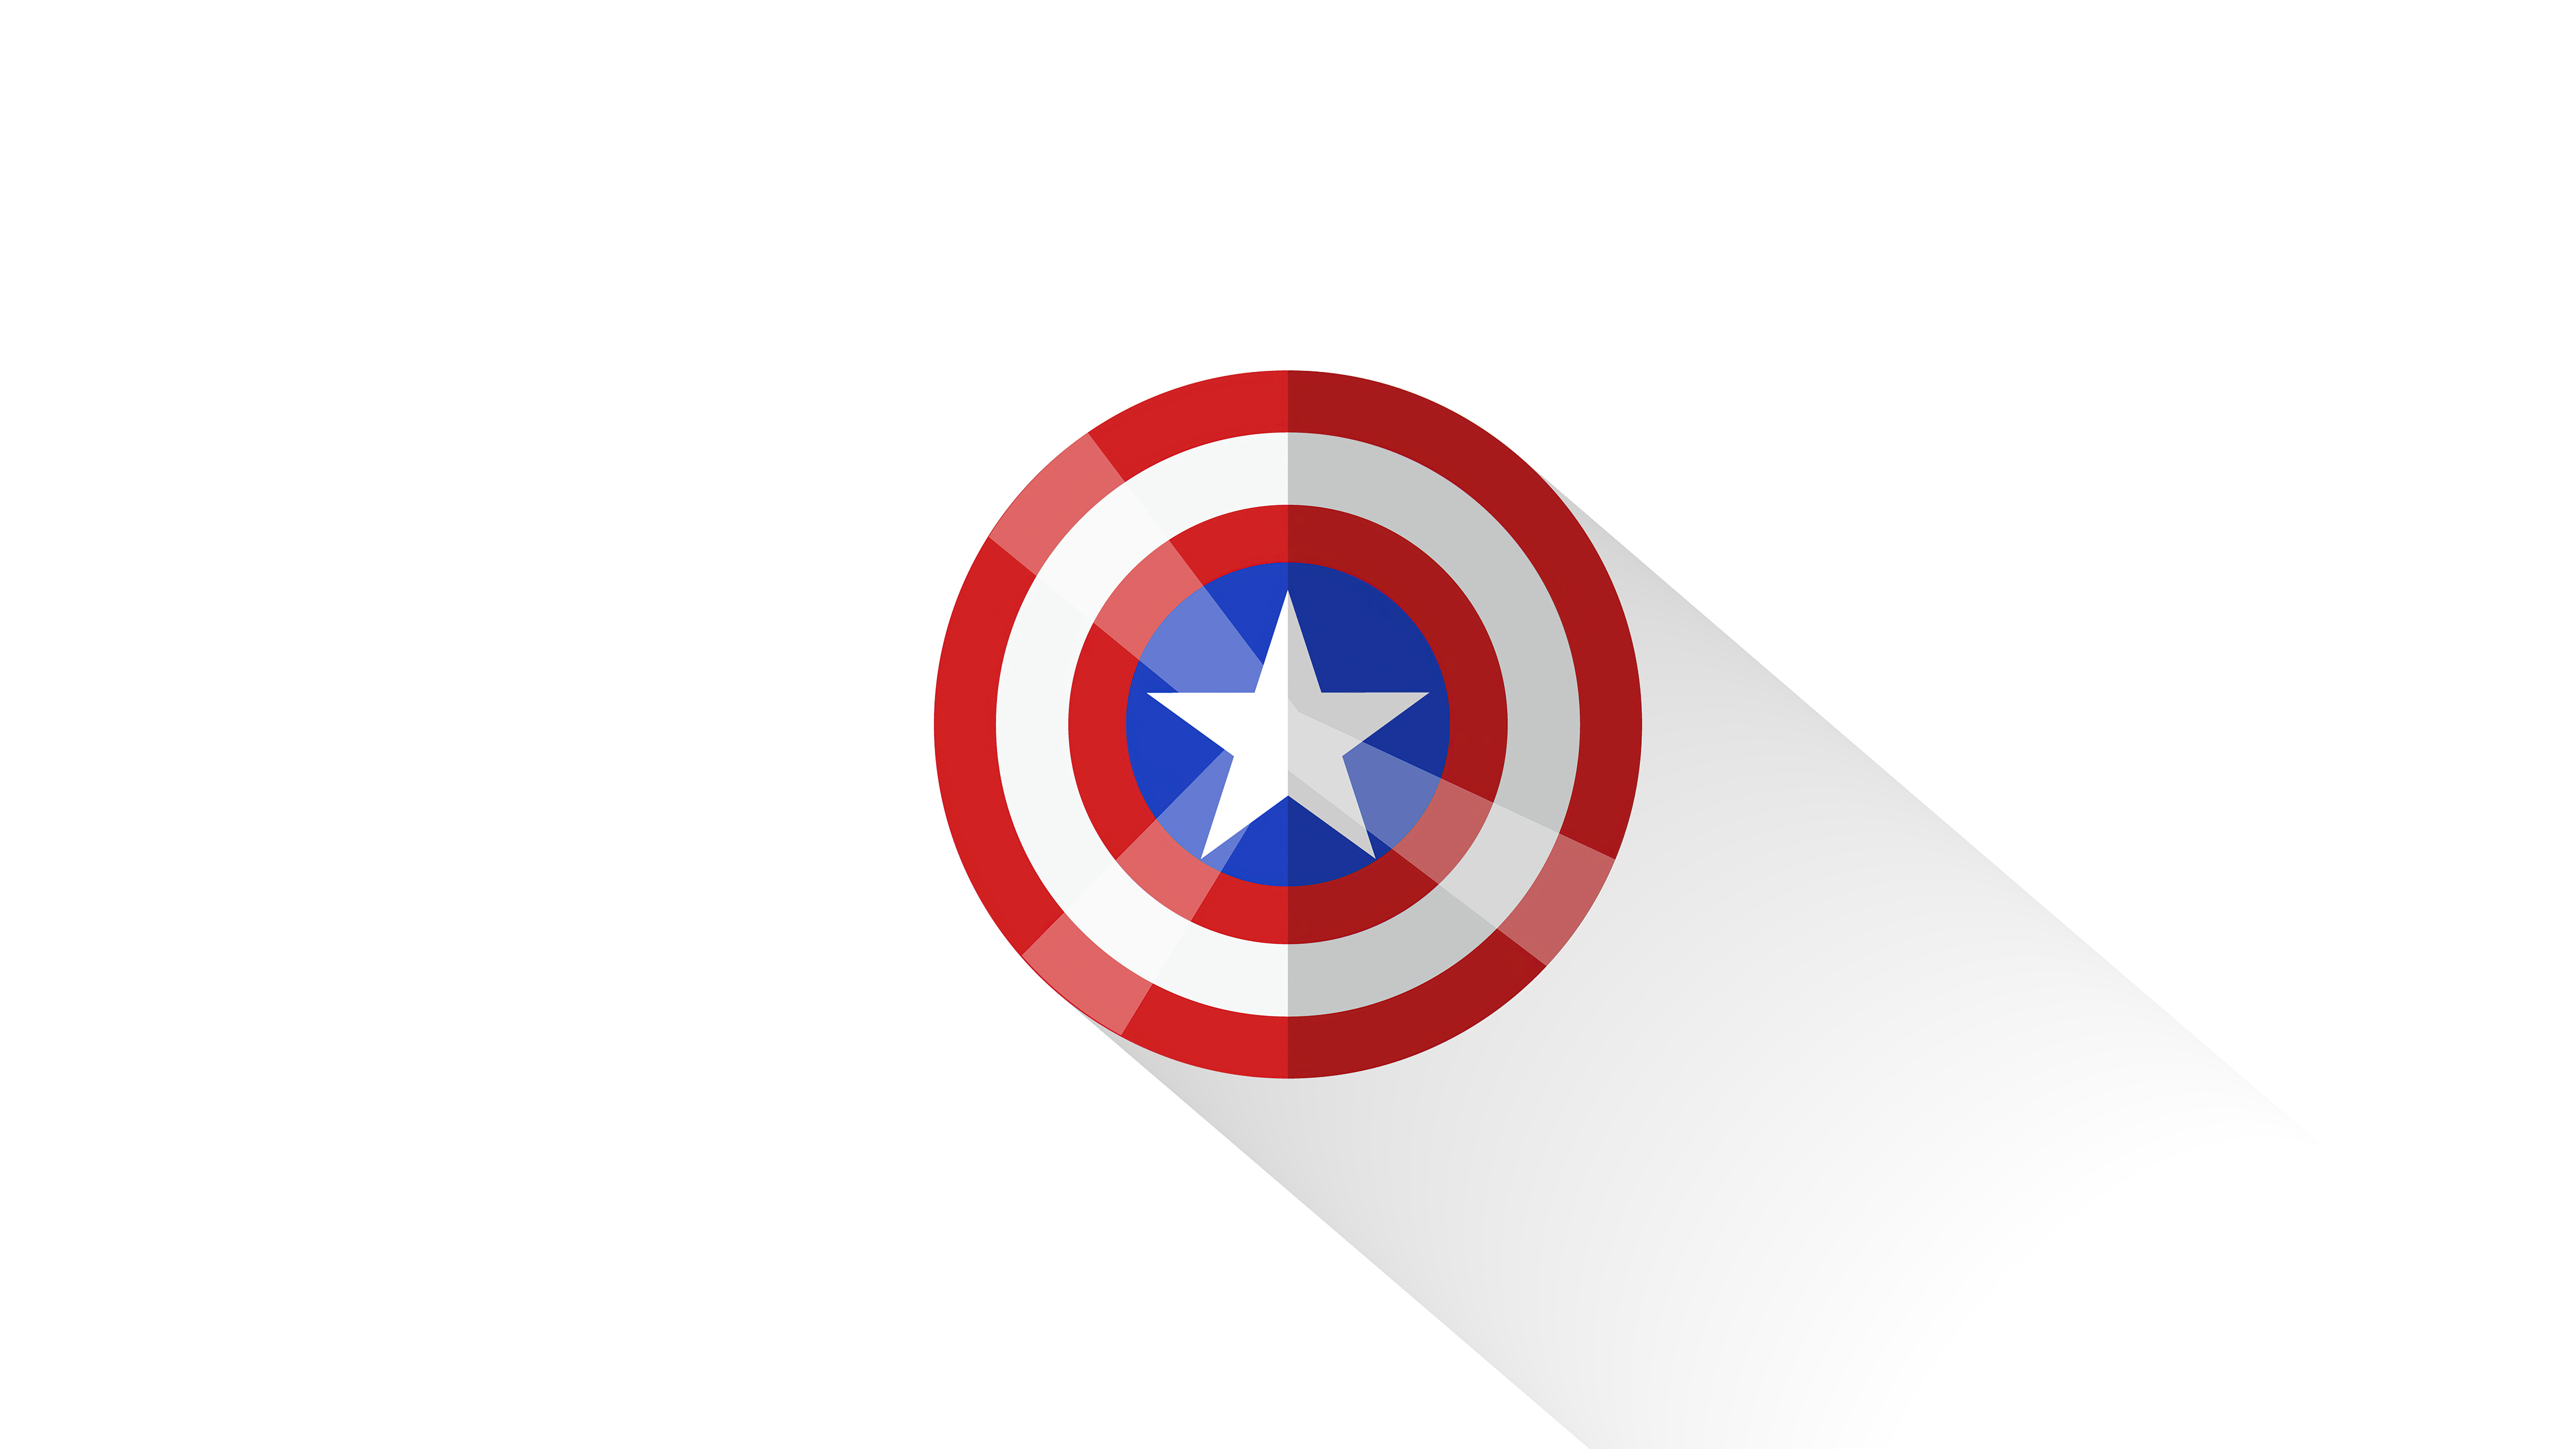 Download Captain America Shield iPhone SHIELD Logo Wallpaper | Wallpapers .com